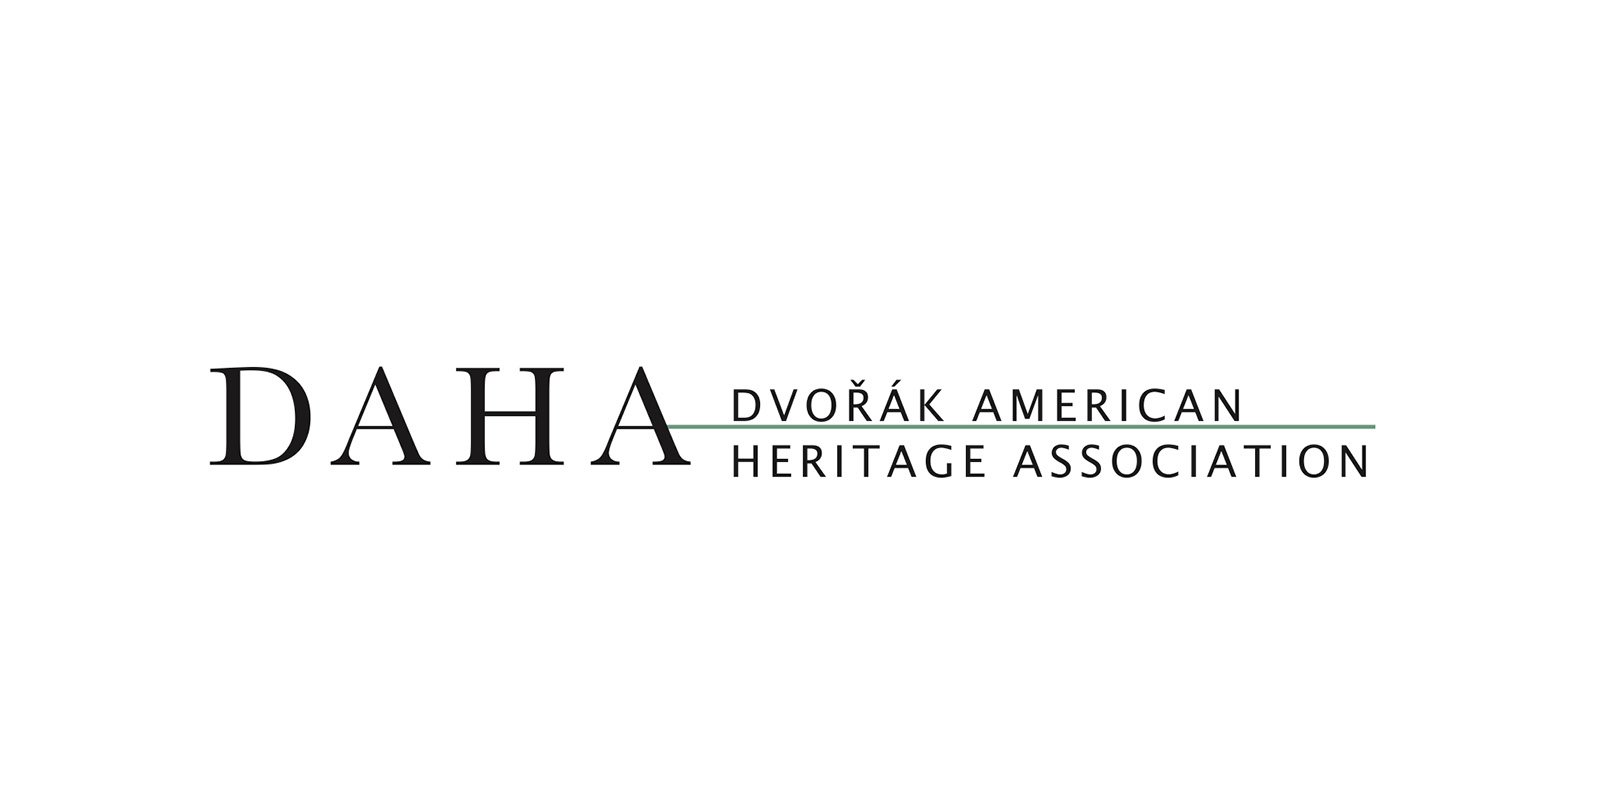 DvorakAmericanHeritageAssociation-SoundingHabsburg-logo-DAHA.jpg